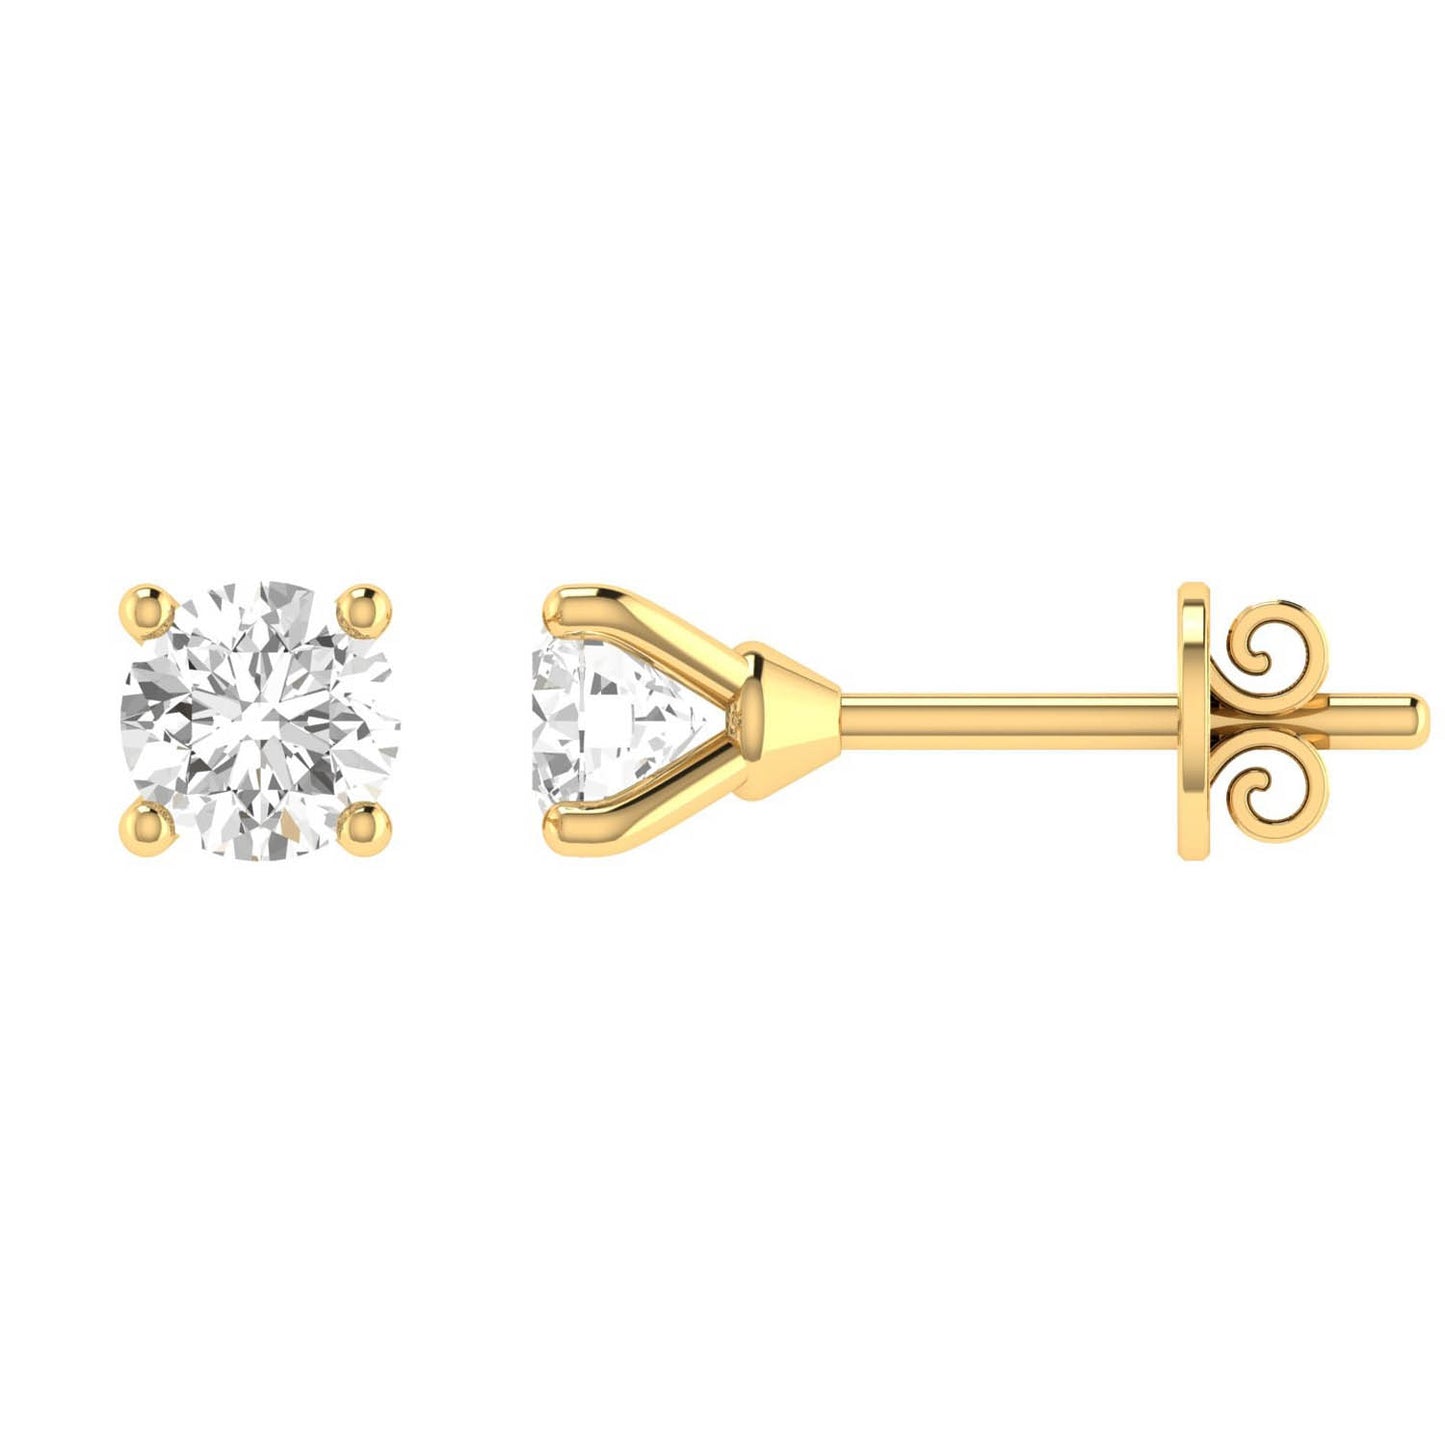 9ct Yellow Gold Diamond Stud Earrings with 0.20ct Diamonds